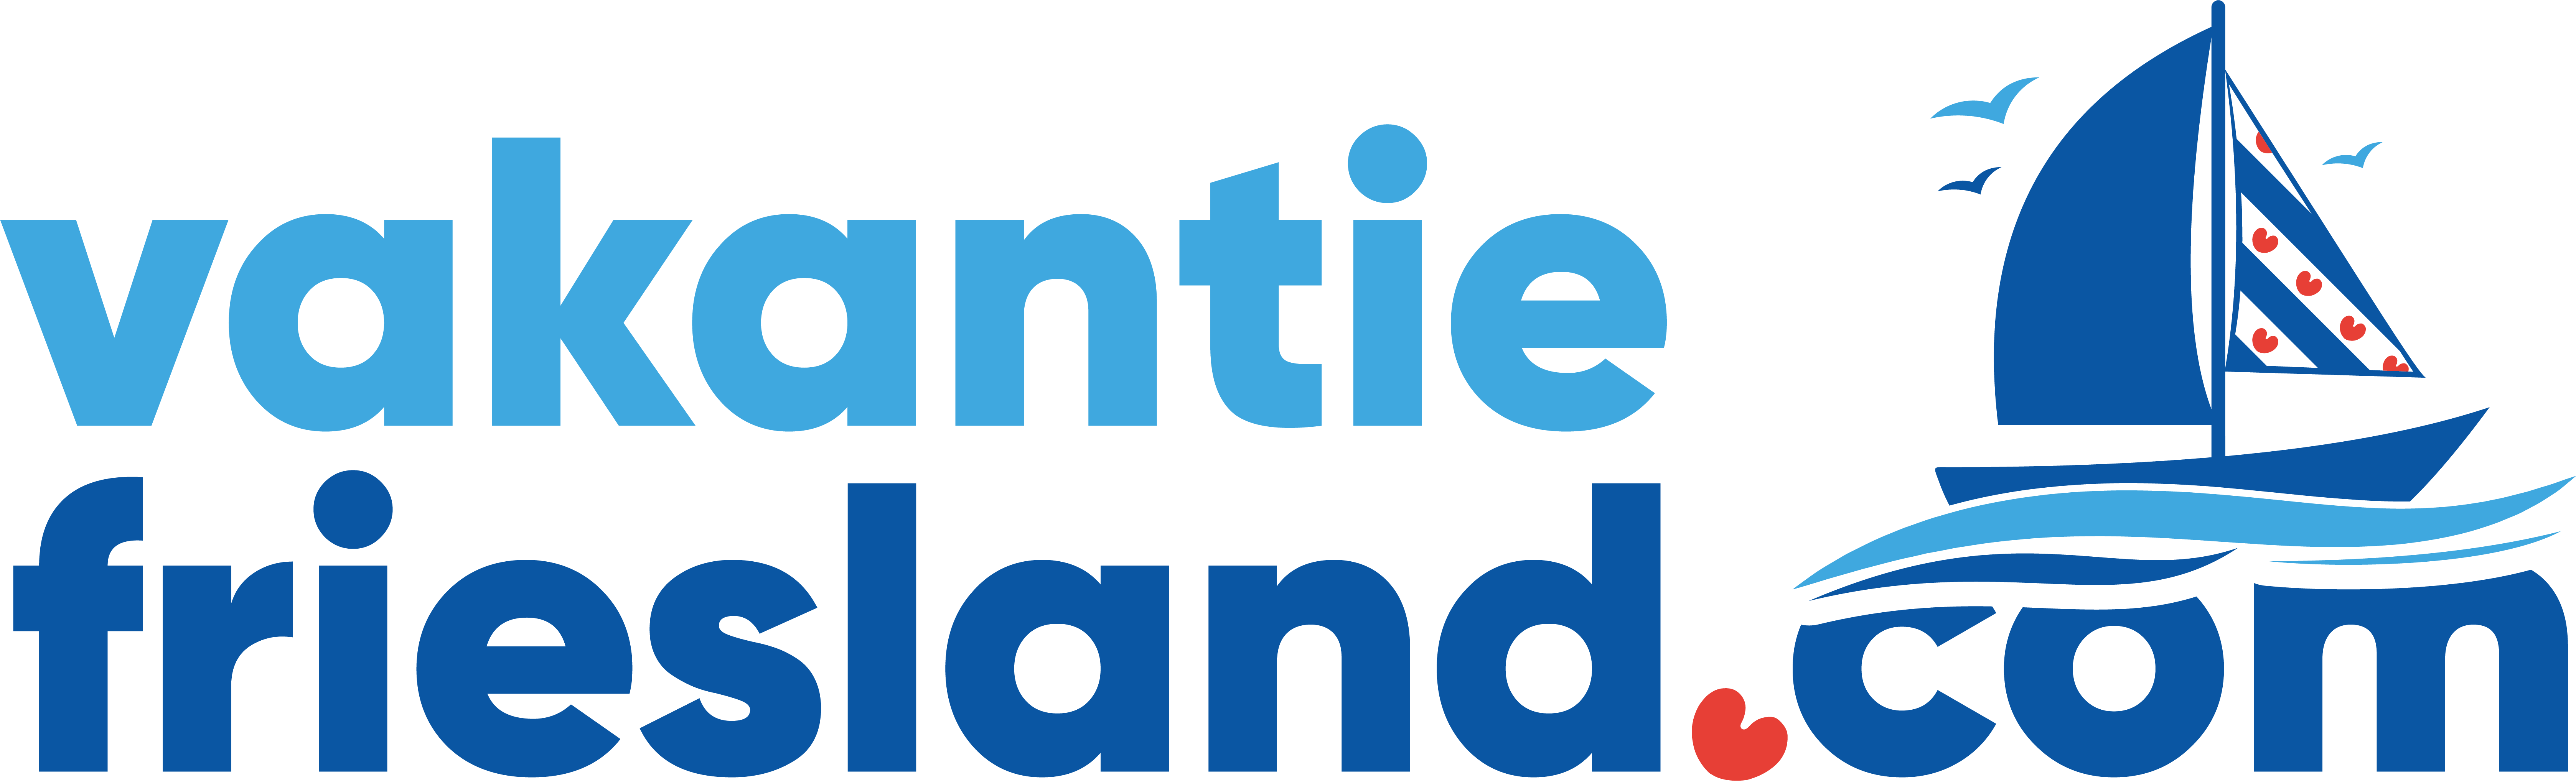 Vakantiefriesland.com logo